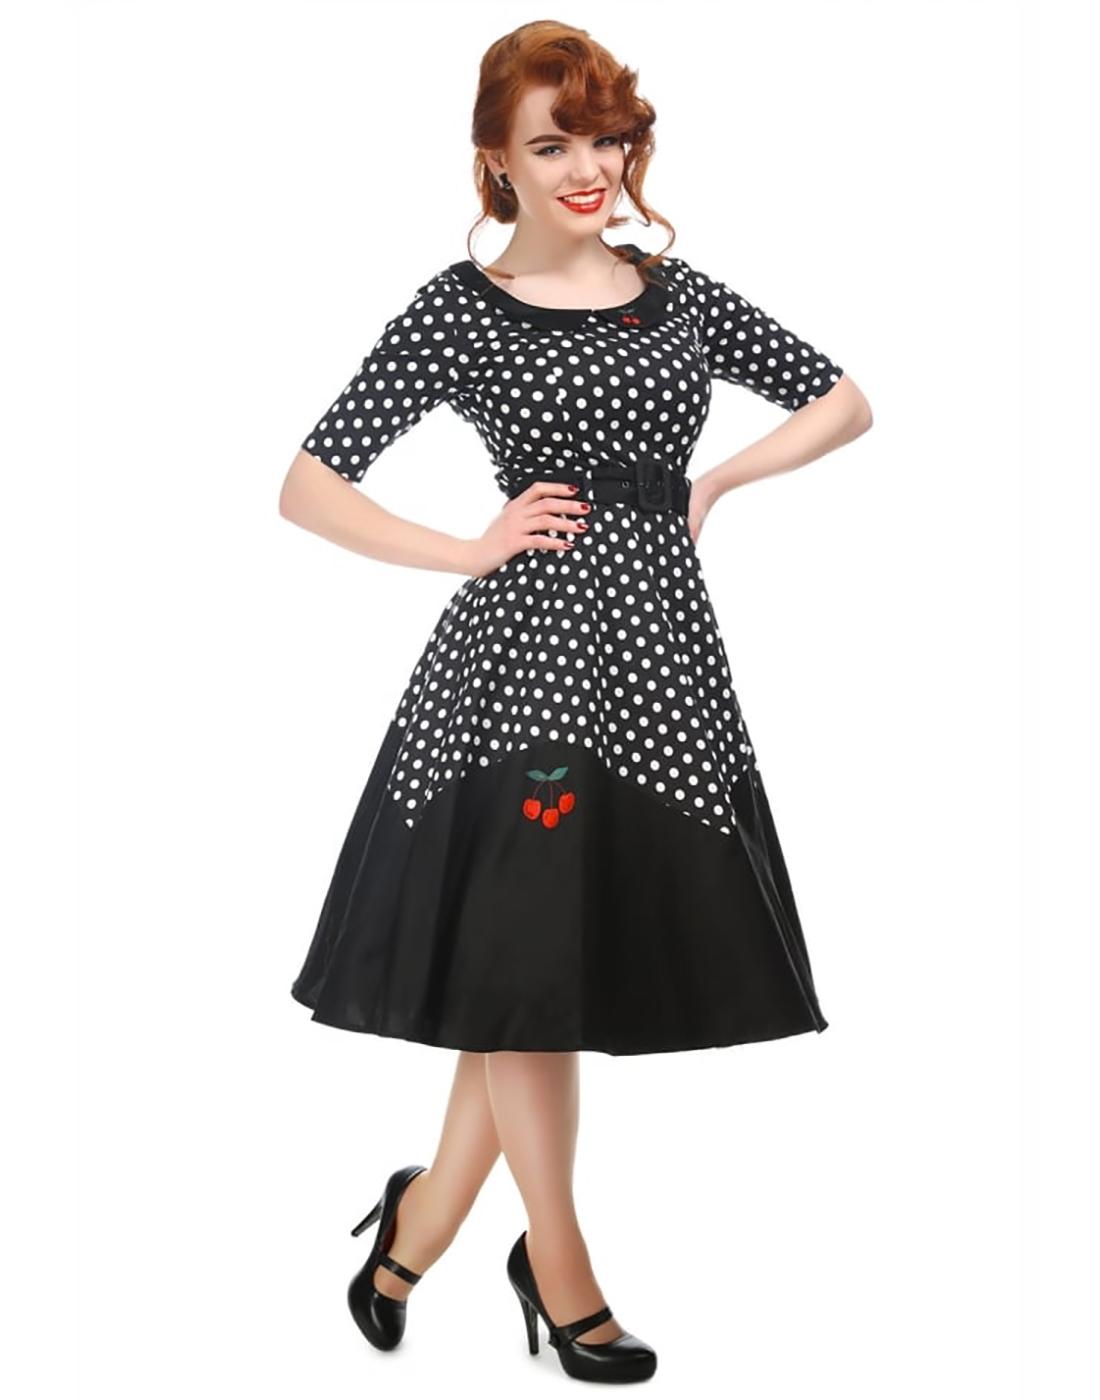 COLLECTIF Cherry Retro 50s Polka Dot Doll Dress in Black/White